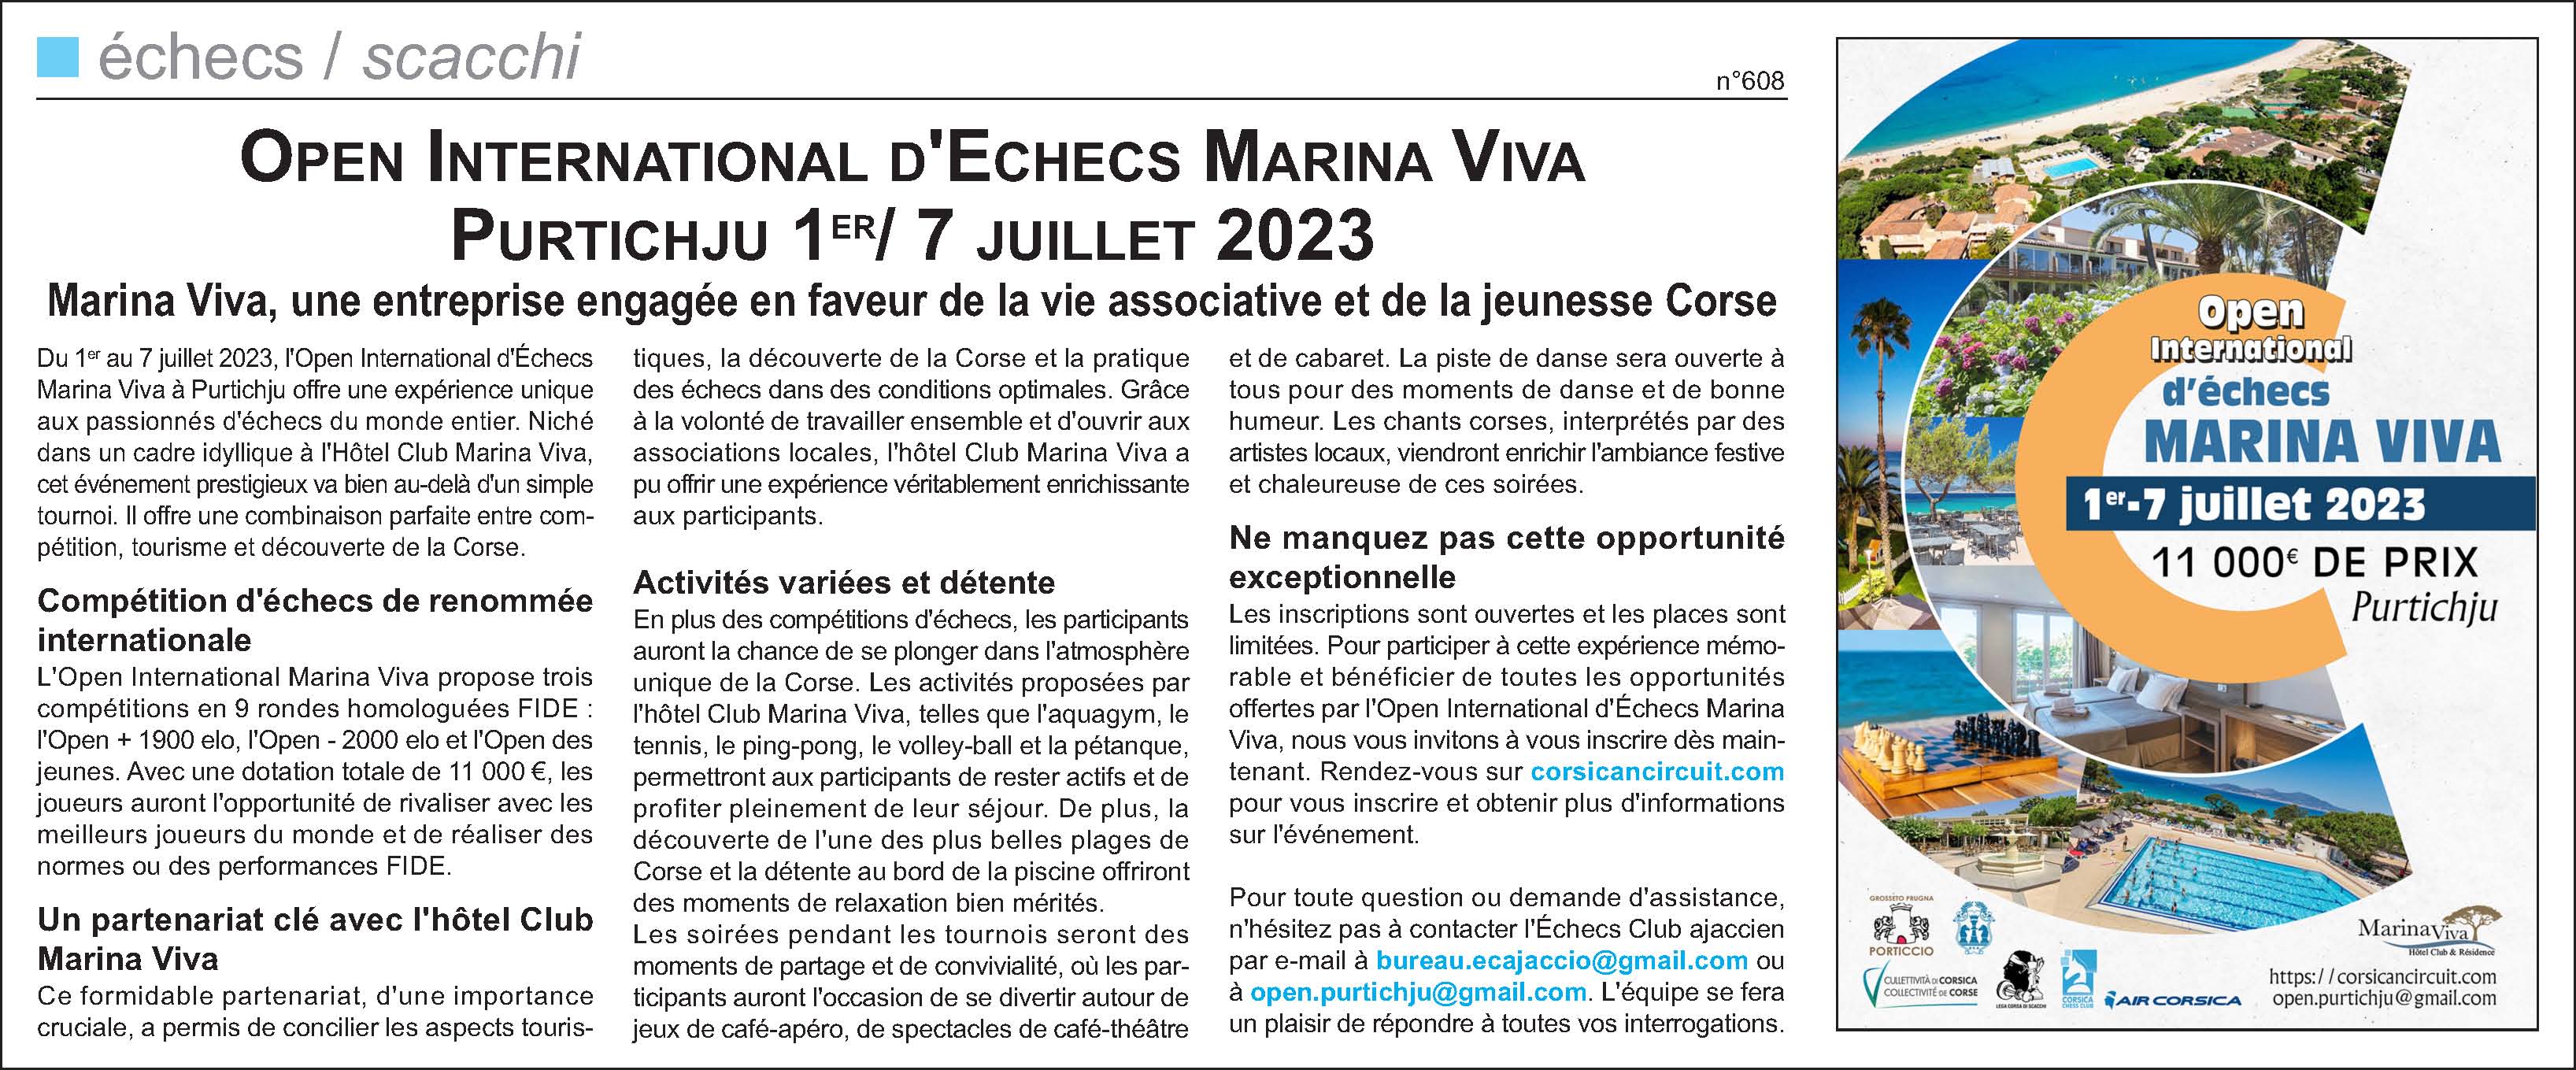 Corse-Matin du 18 juin 2023